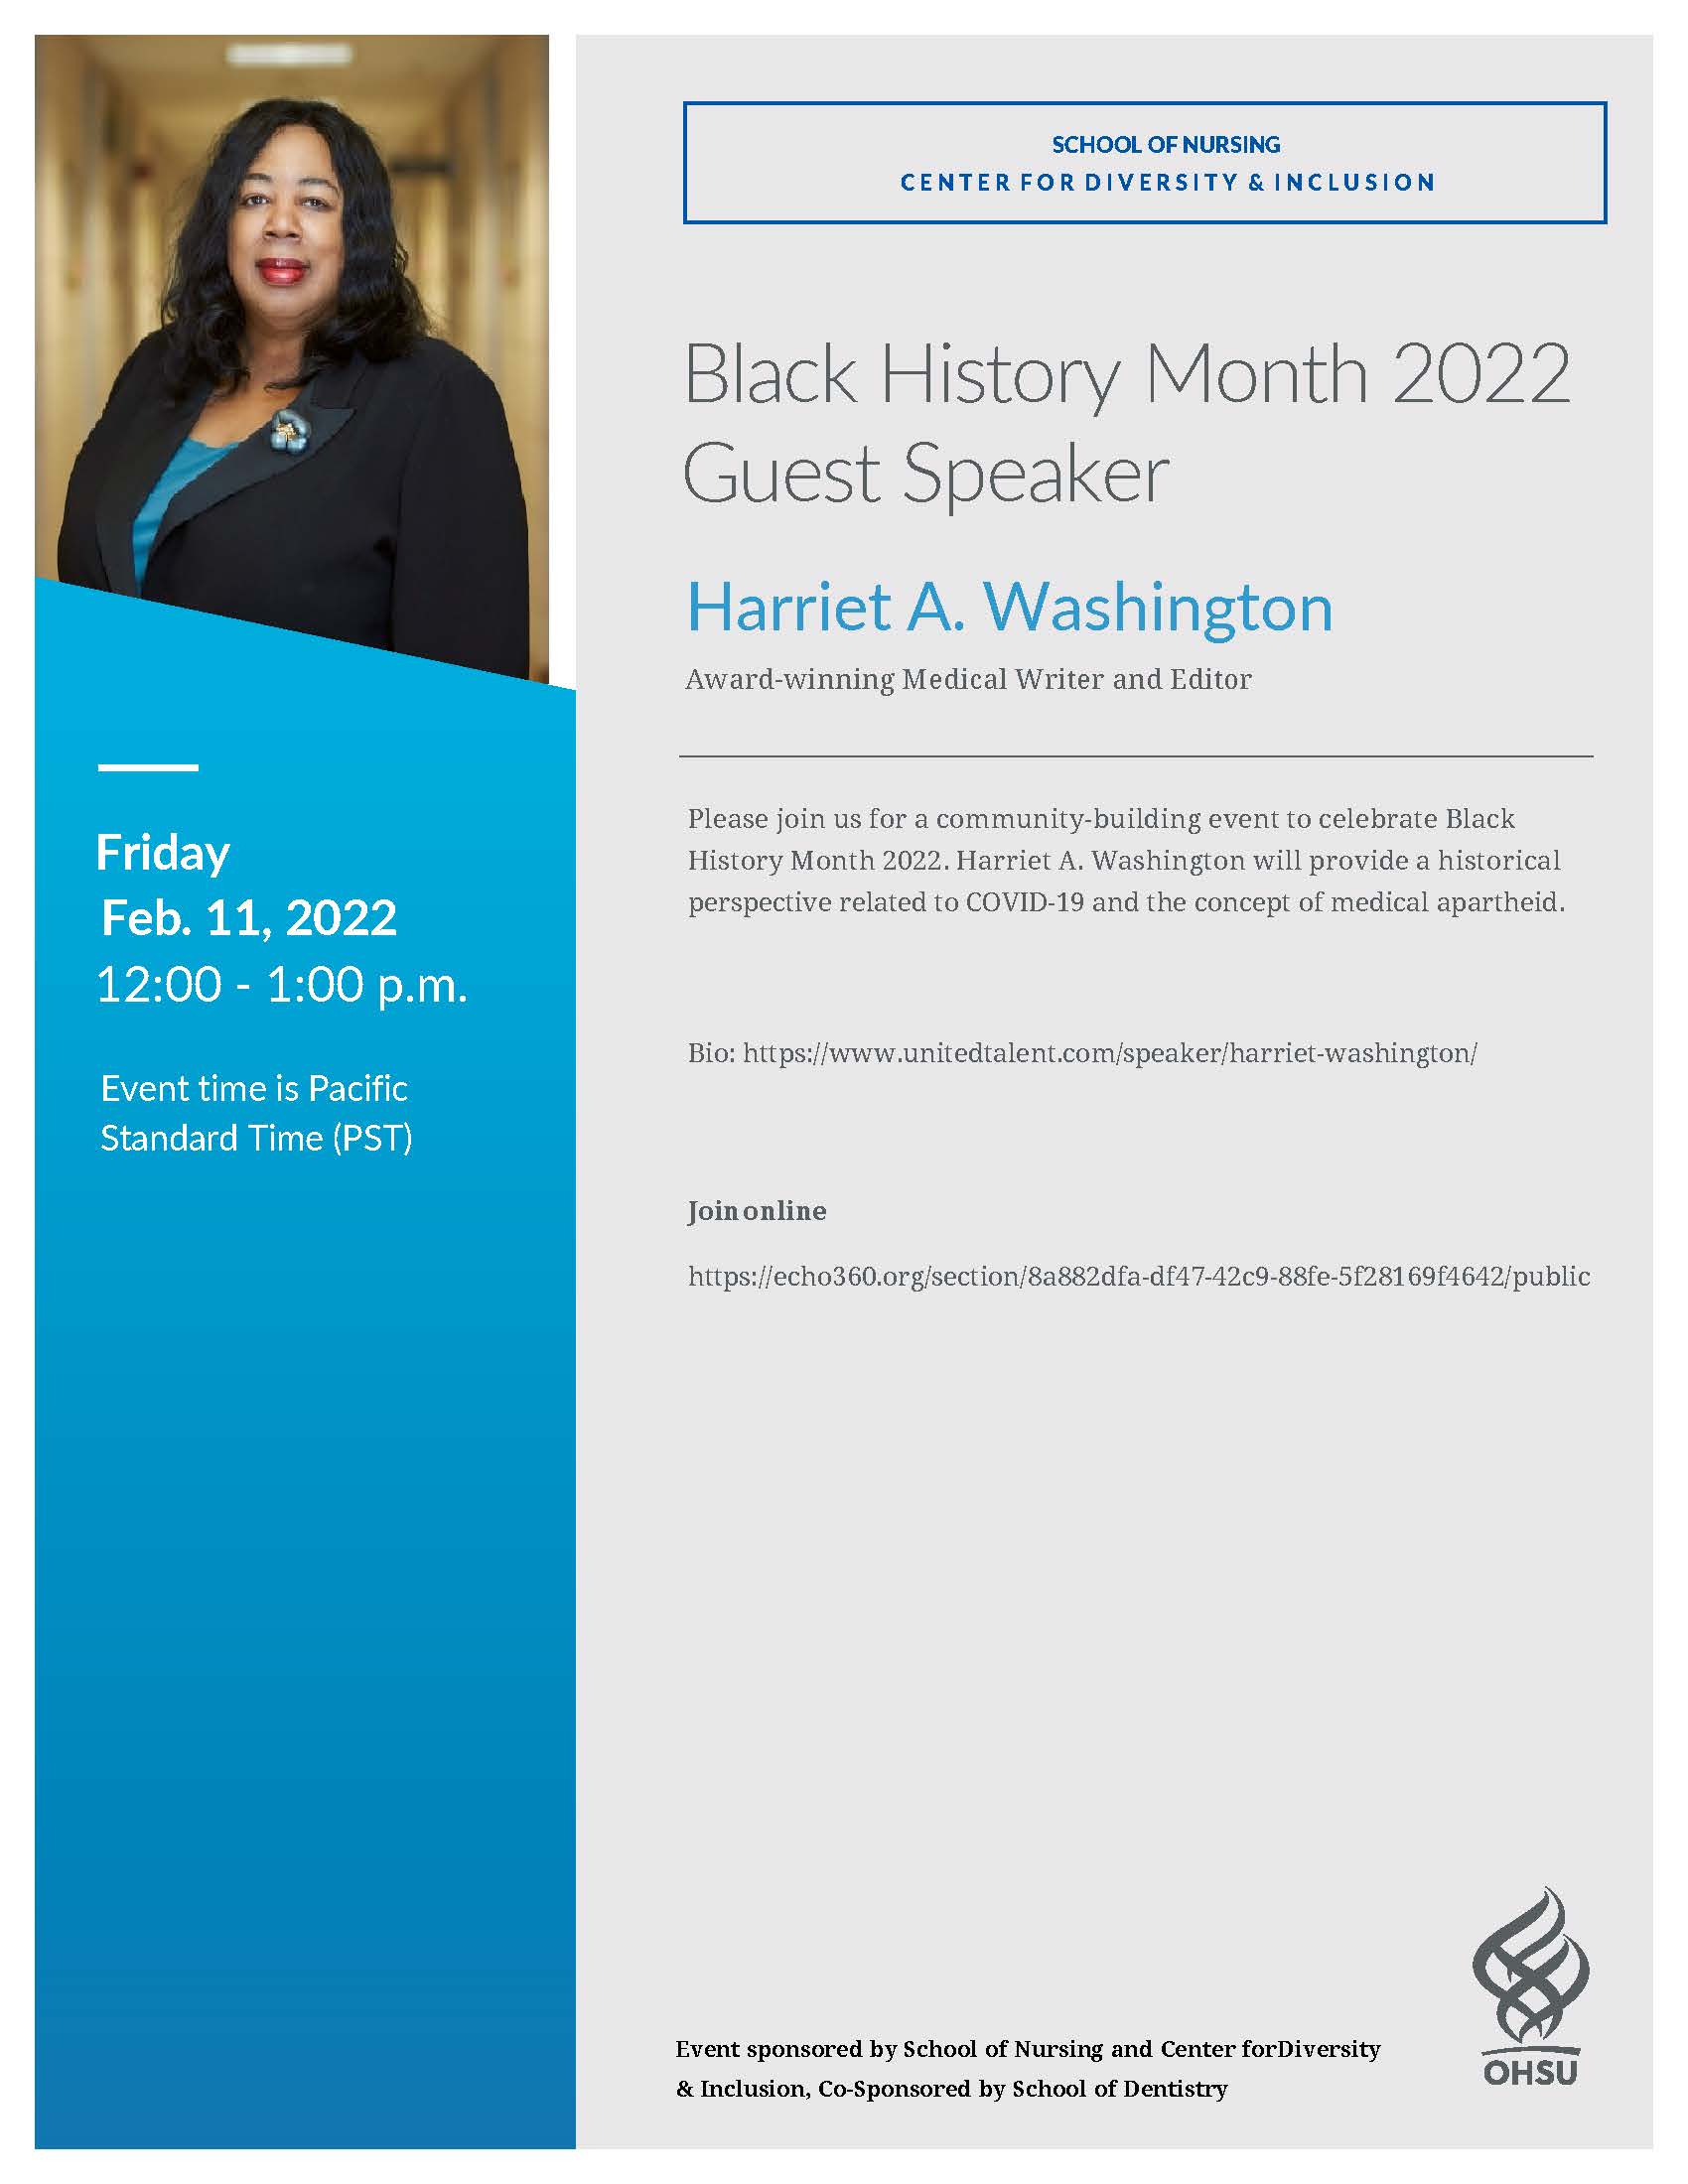 Flyer announcing Black History Month guest speaker Harriet A. Washington